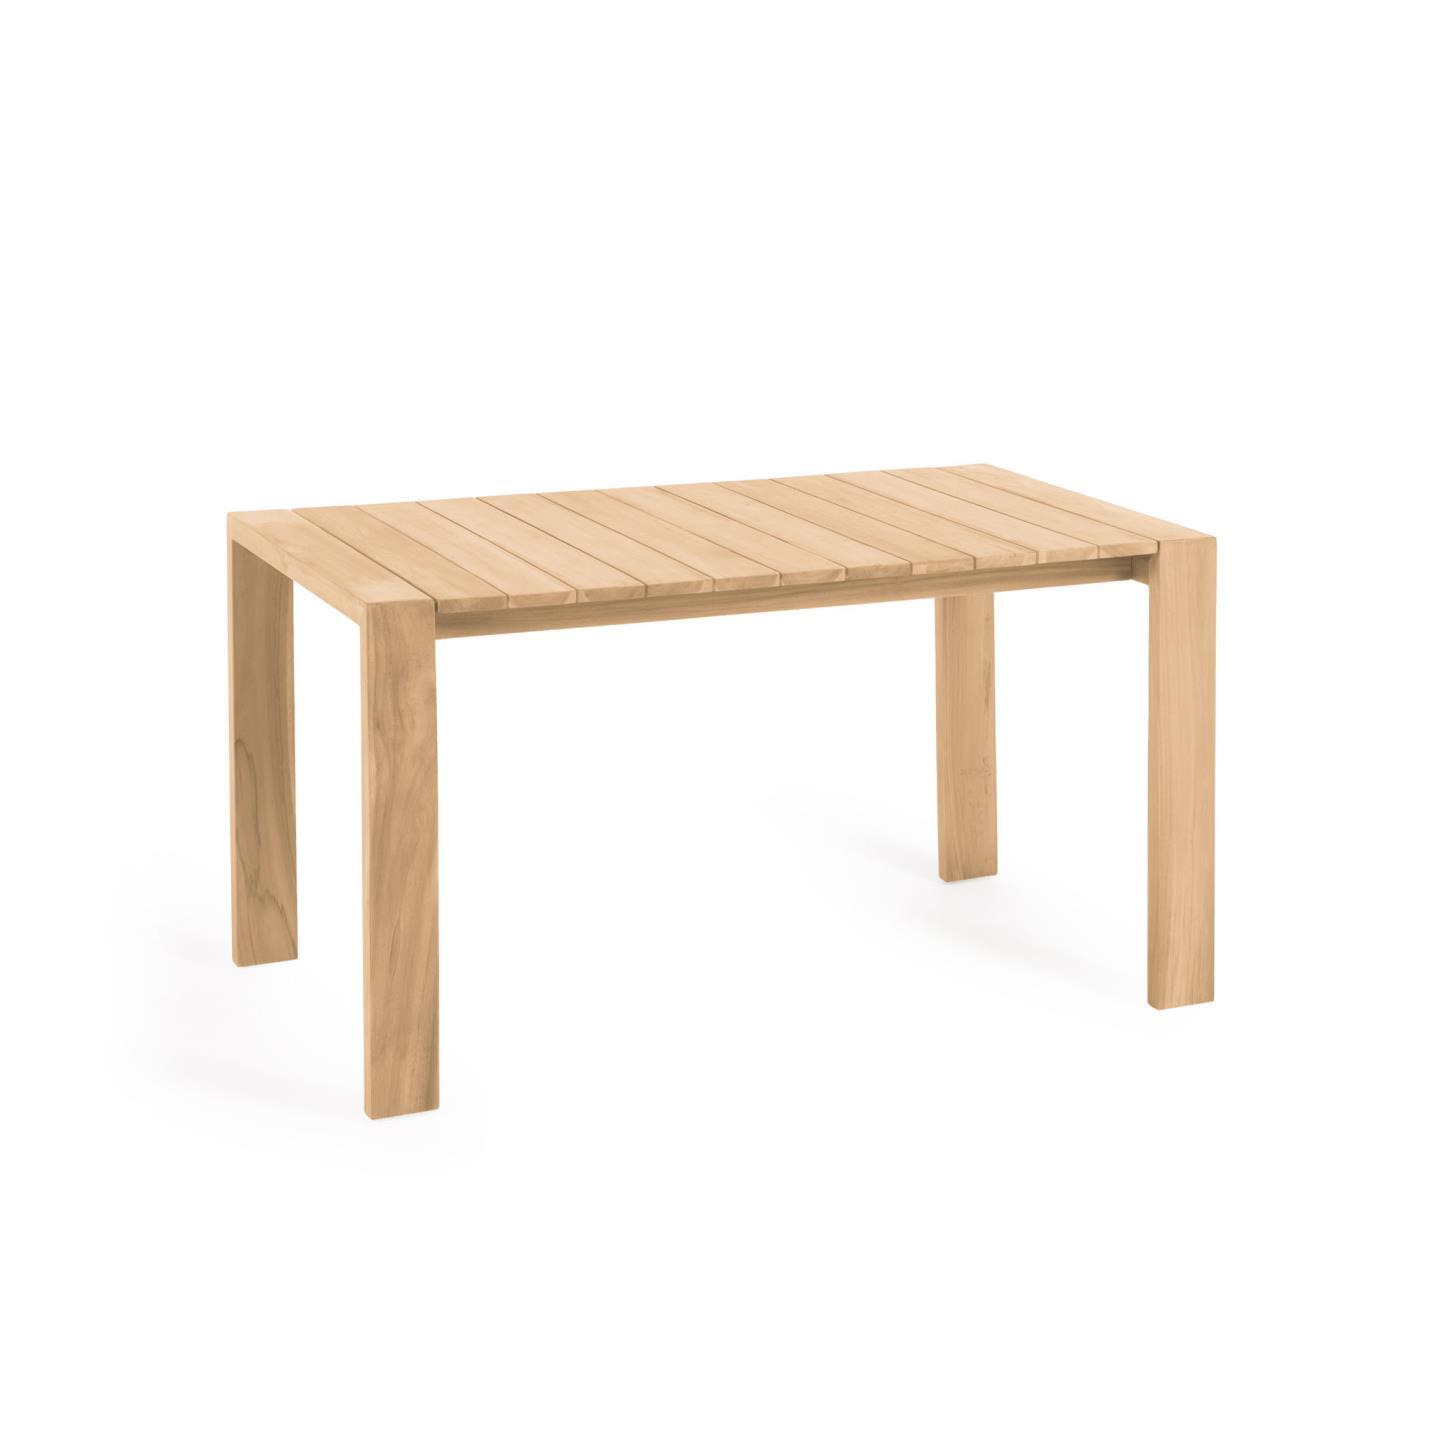 Victoire solid teak outdoor table 160 x 90 cm